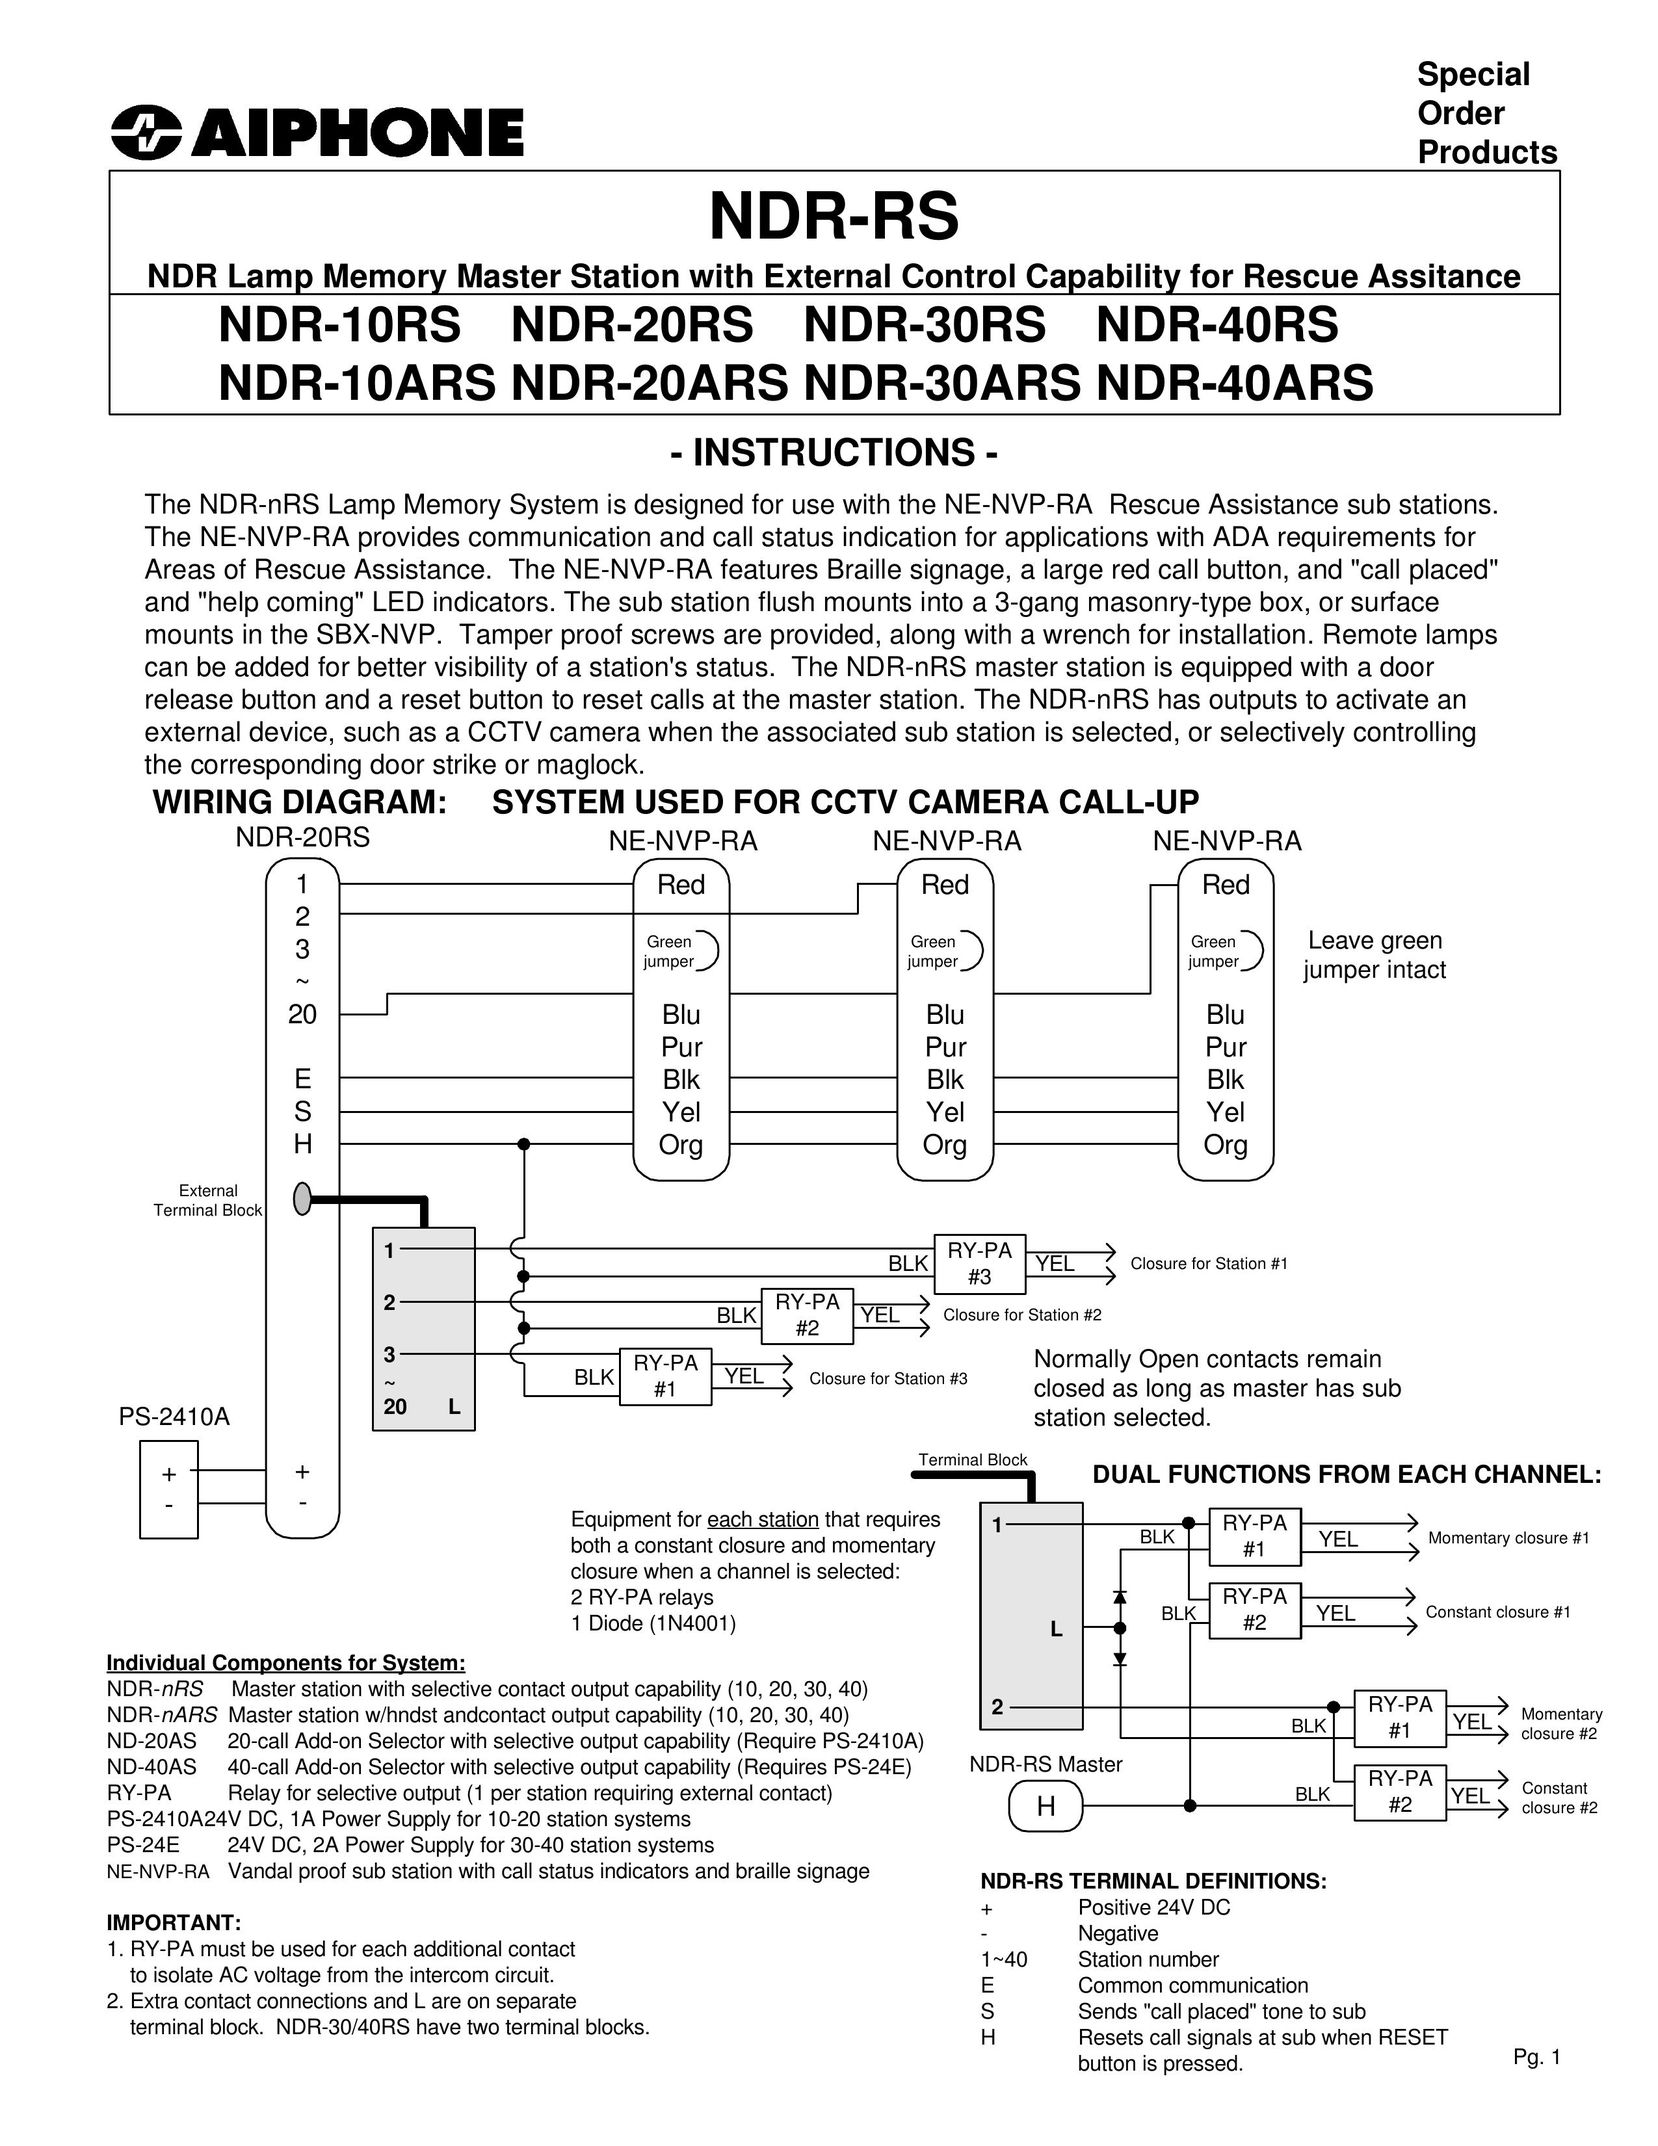 Aiphone NDR-40RS Telephone User Manual